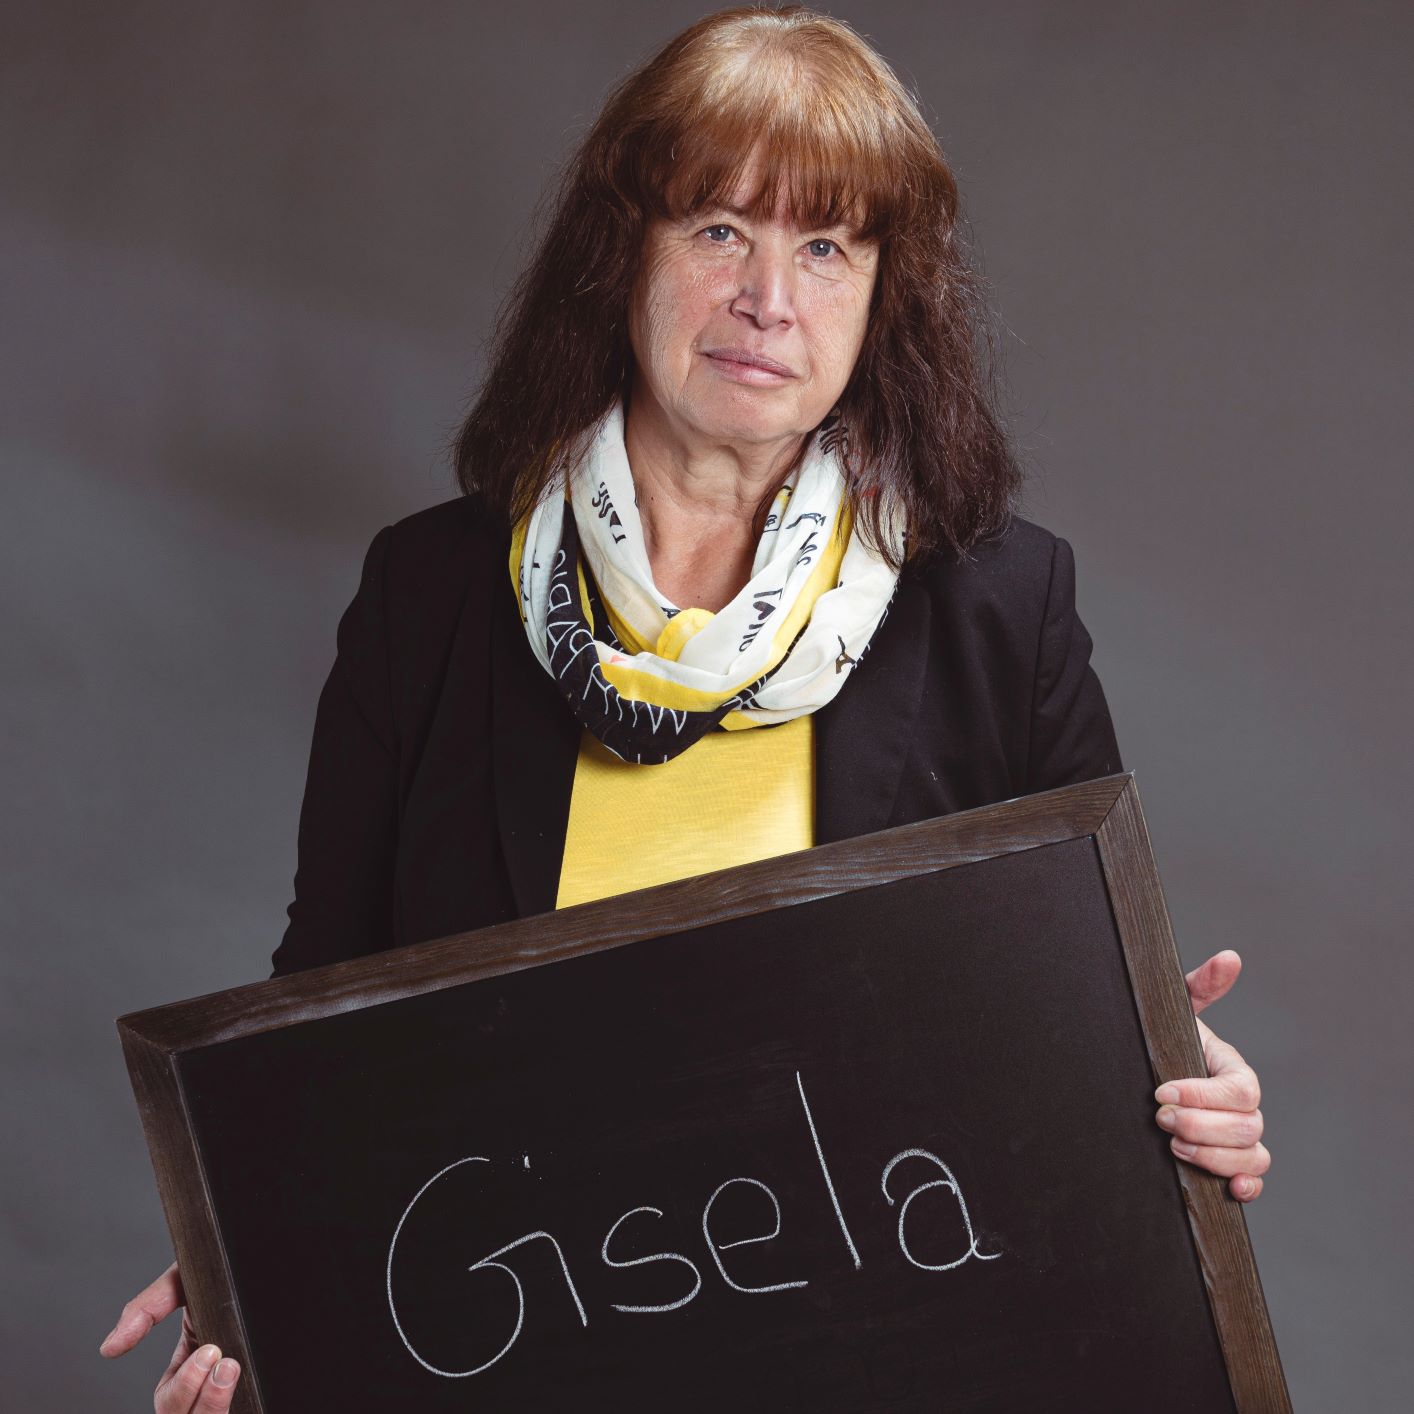 Gisela Roth